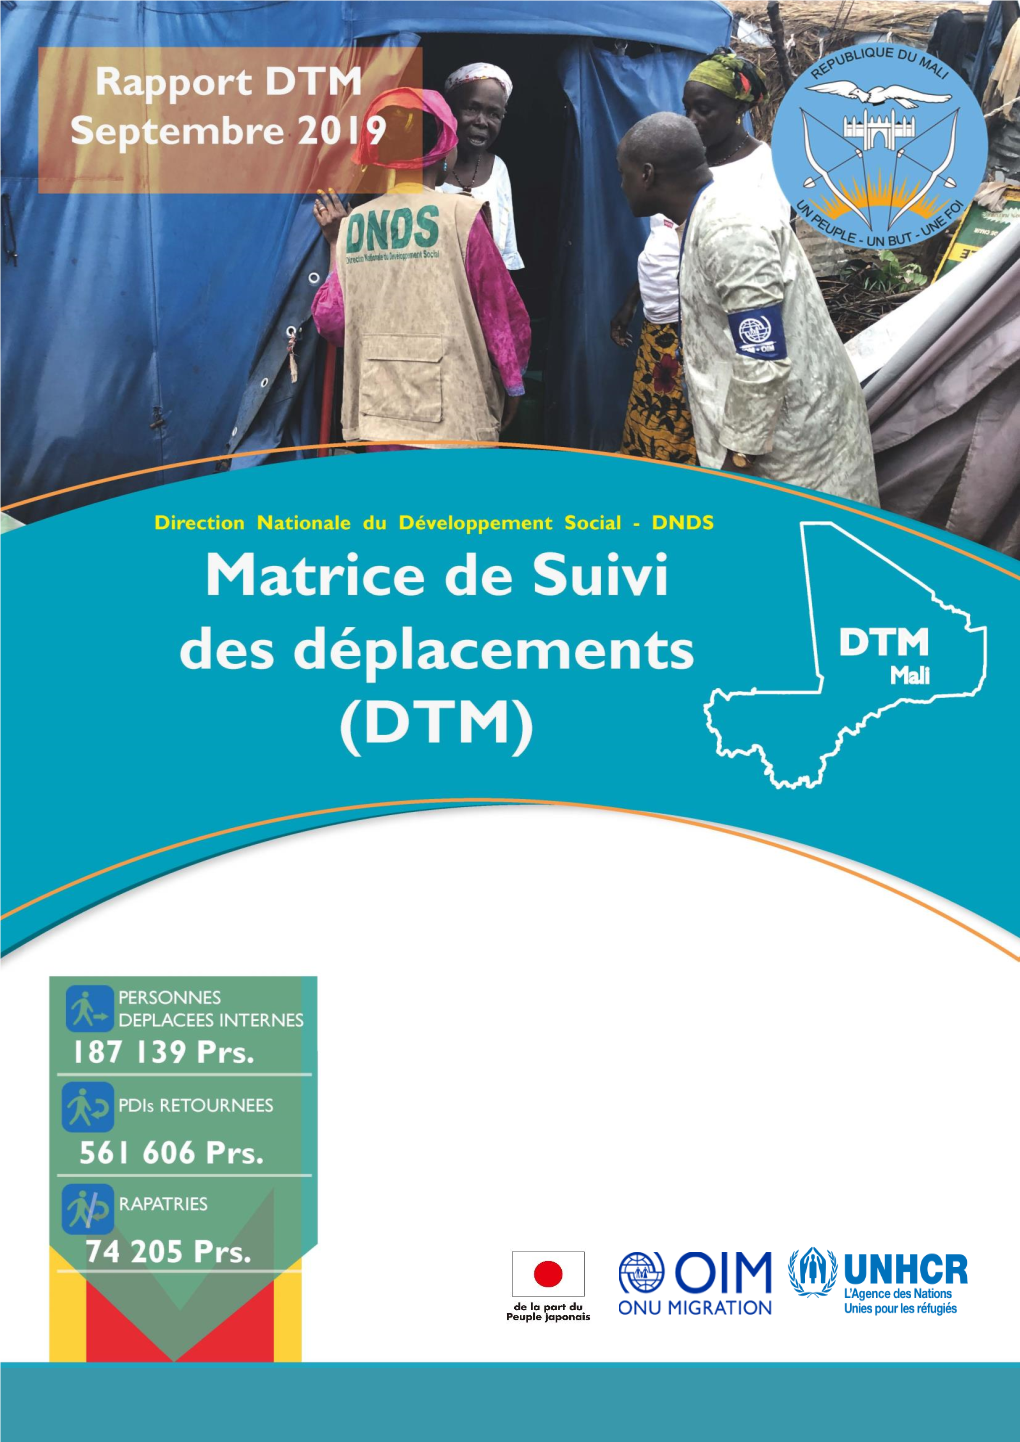 DTM Mali – Juin 2019